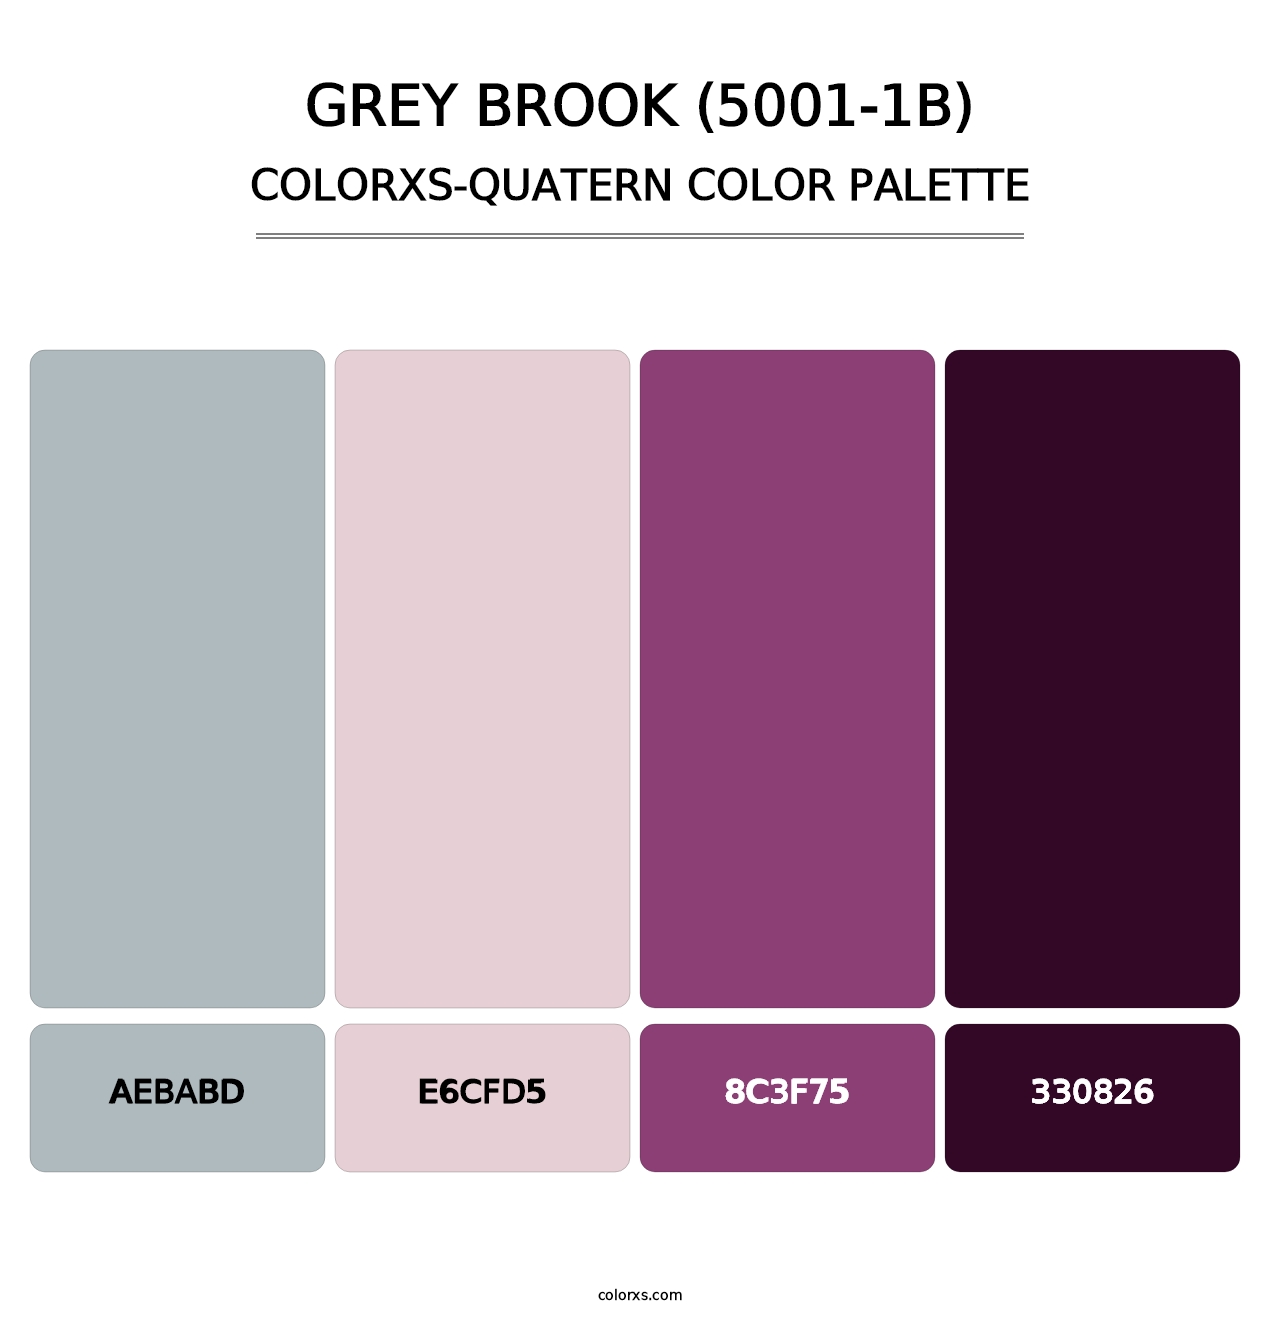 Grey Brook (5001-1B) - Colorxs Quatern Palette